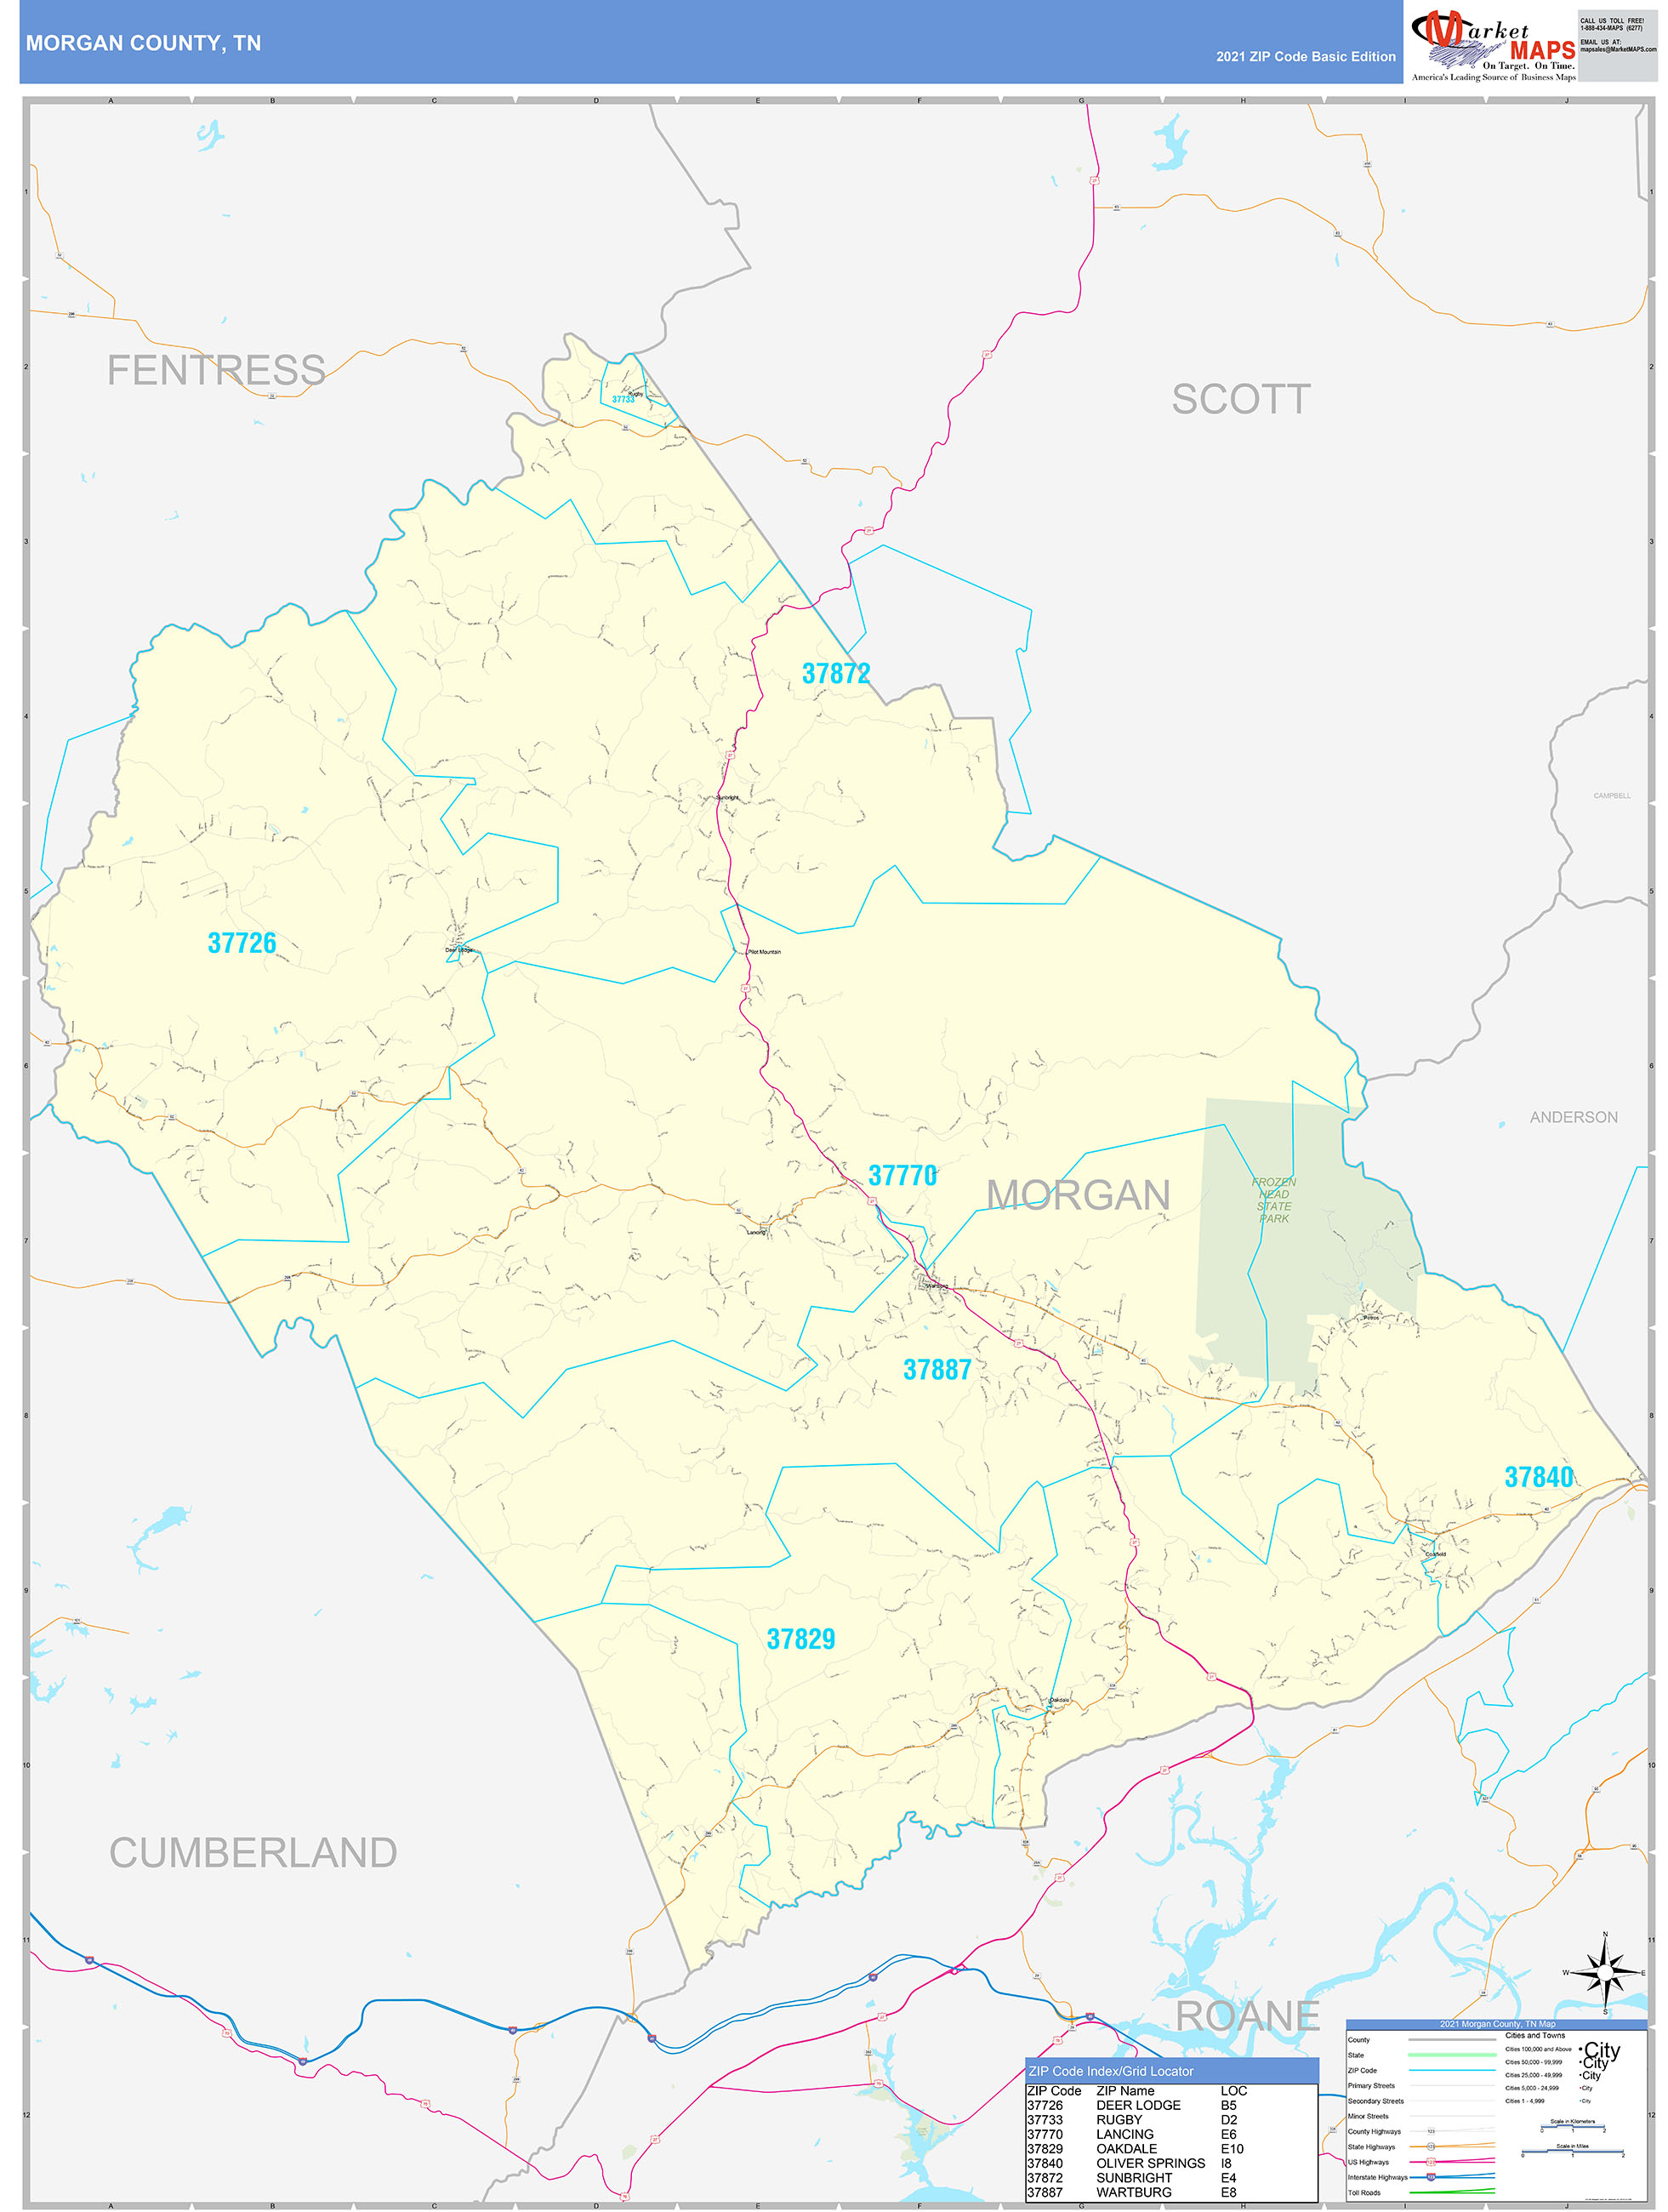 Morgan County, TN Zip Code Wall Map Basic Style by MarketMAPS - MapSales